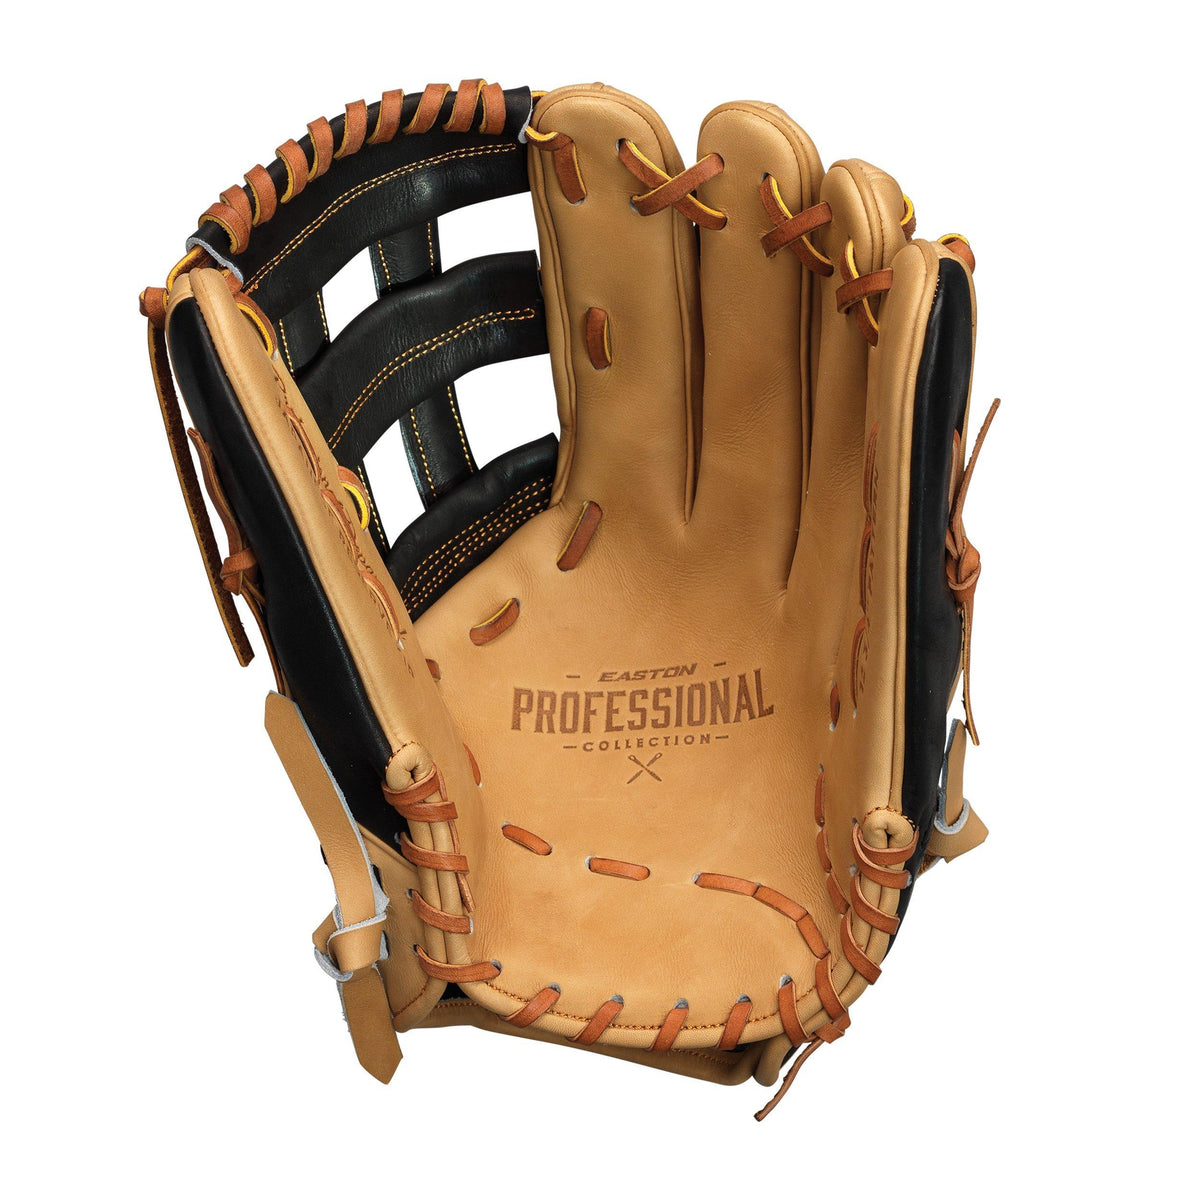 Easton Professional Reserve Alex Bregman Baseball Glove 11.75 RHT